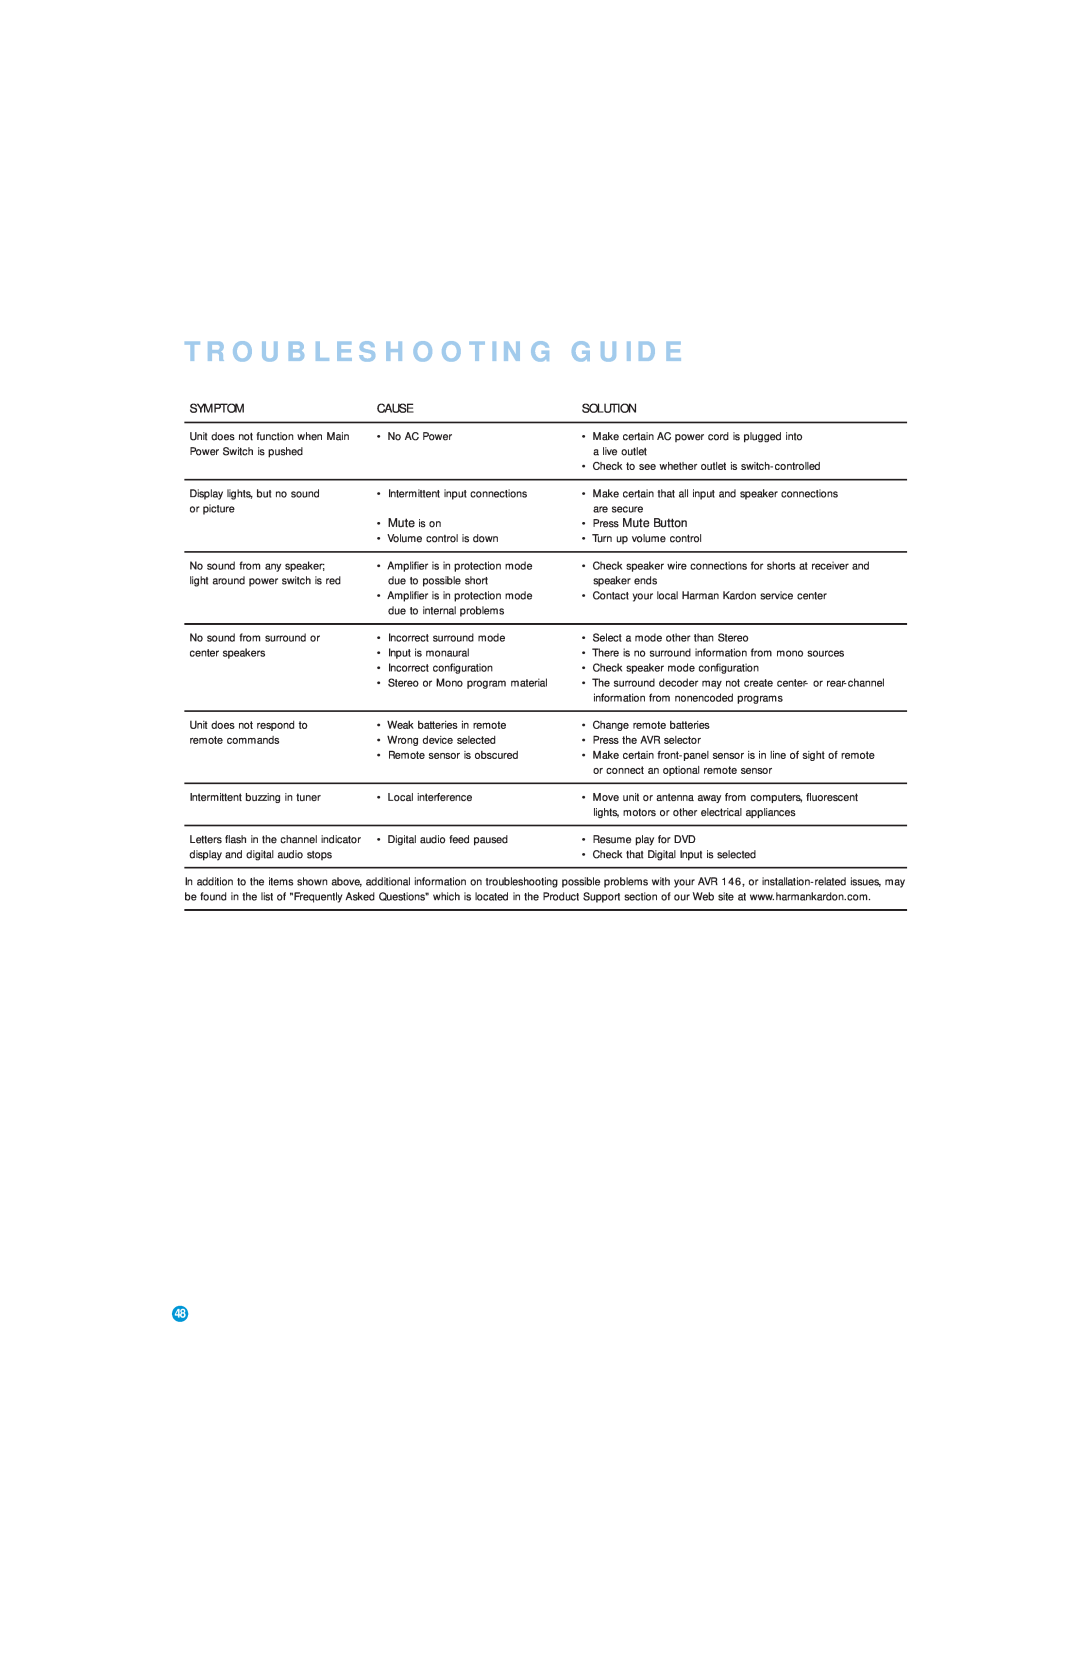 Harman-Kardon AVR 146 owner manual Troubleshooting Guide 